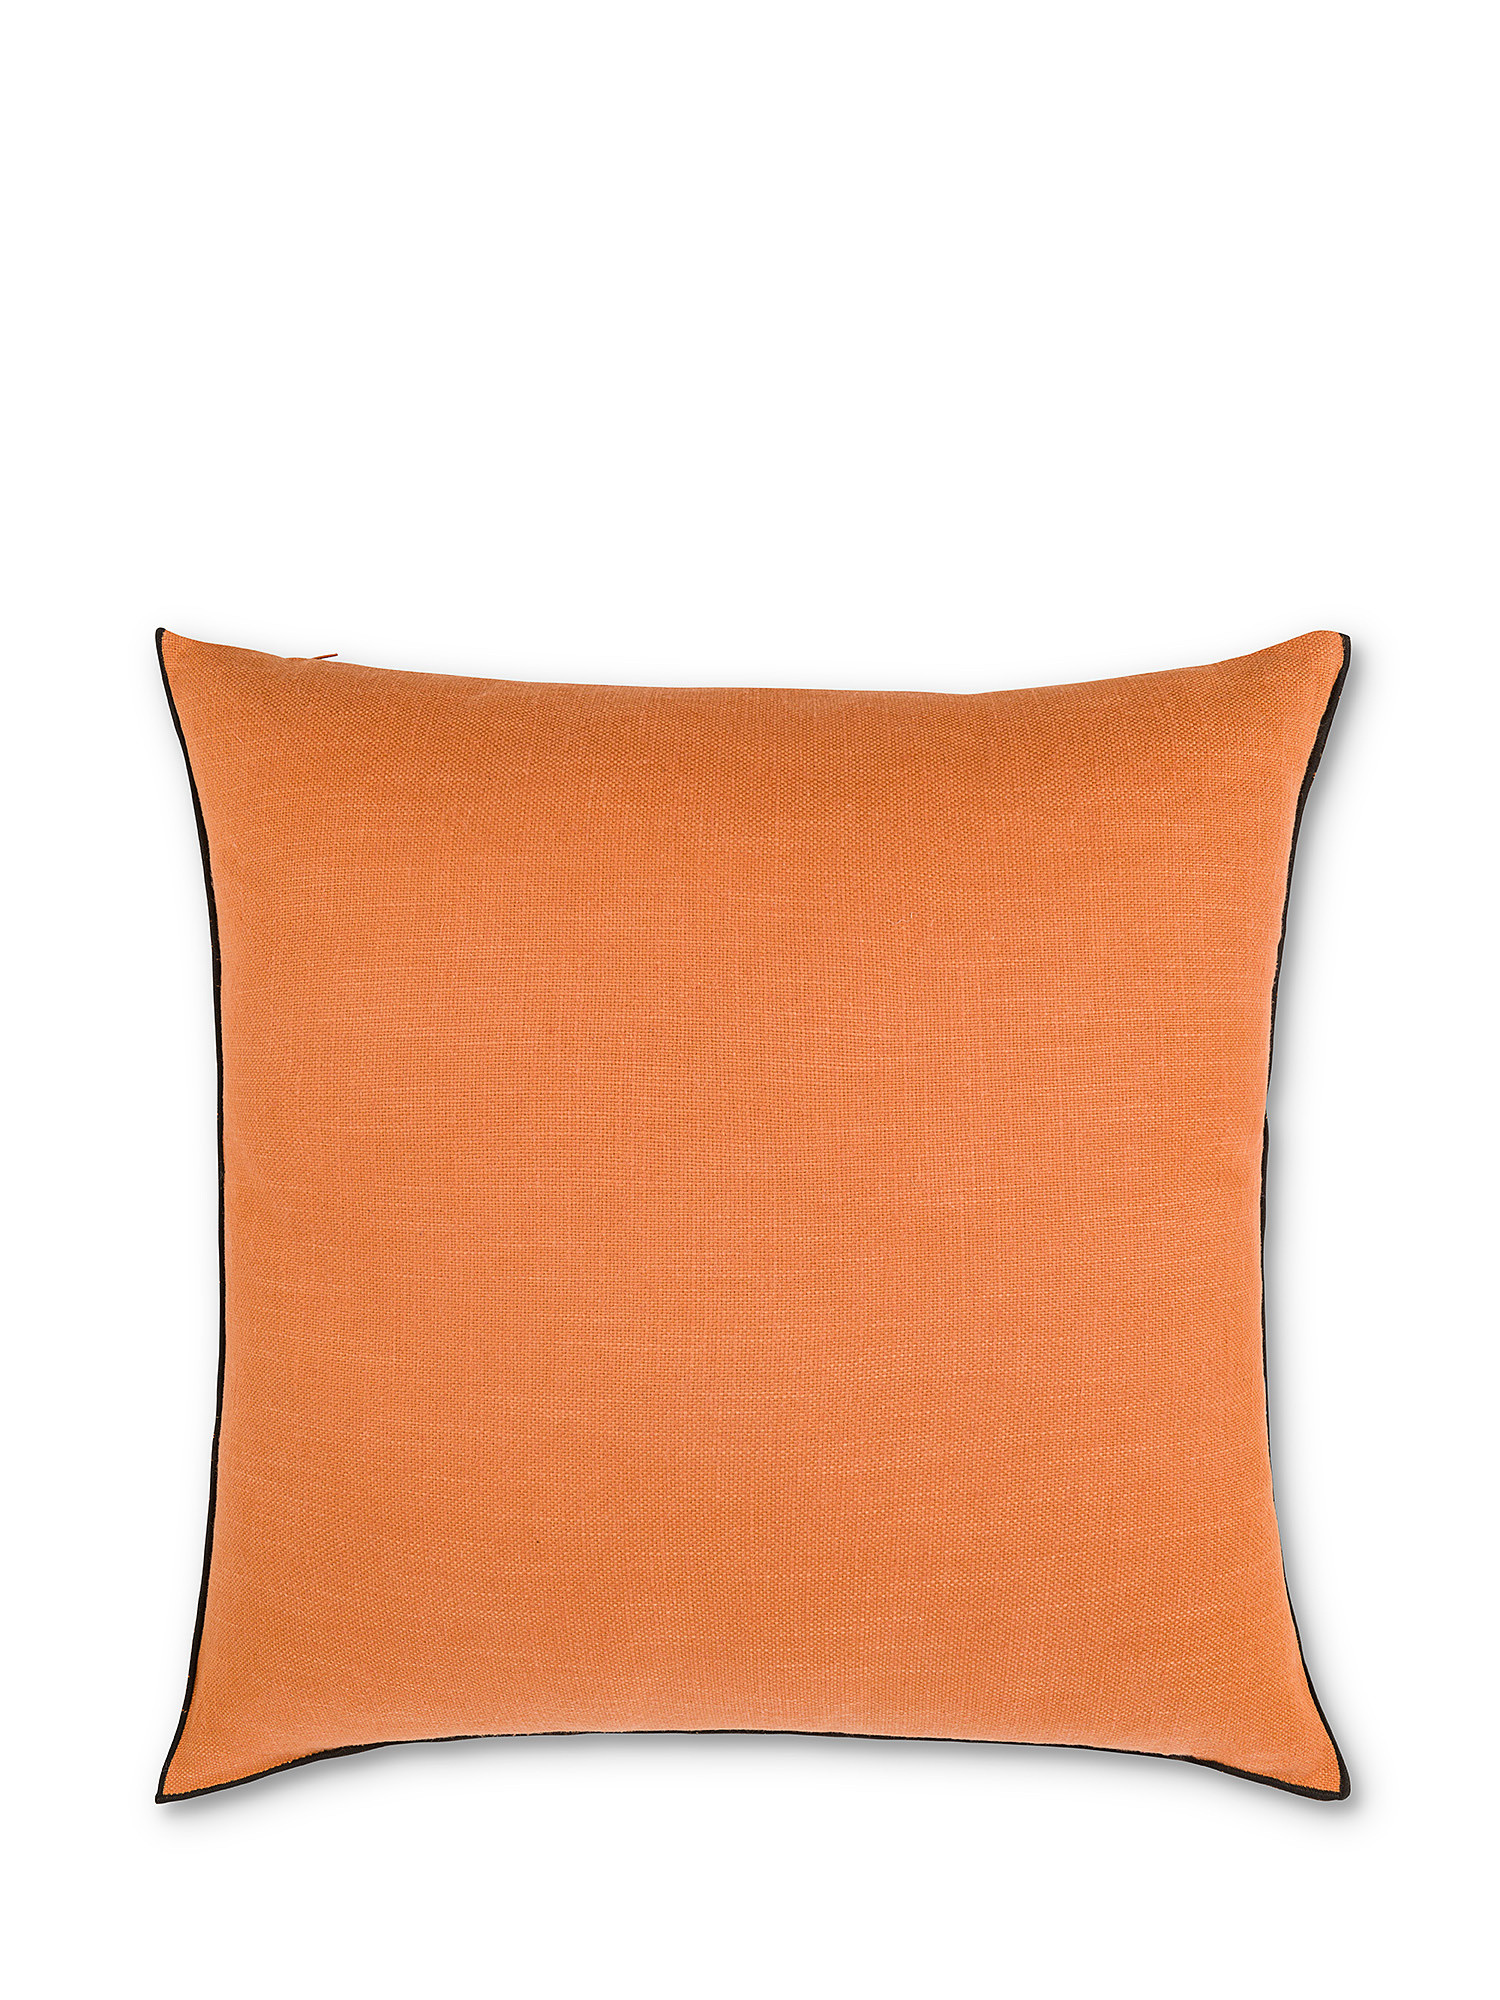 Cuscino tessuto tinta unita 50x50cm, Arancione chiaro, large image number 1